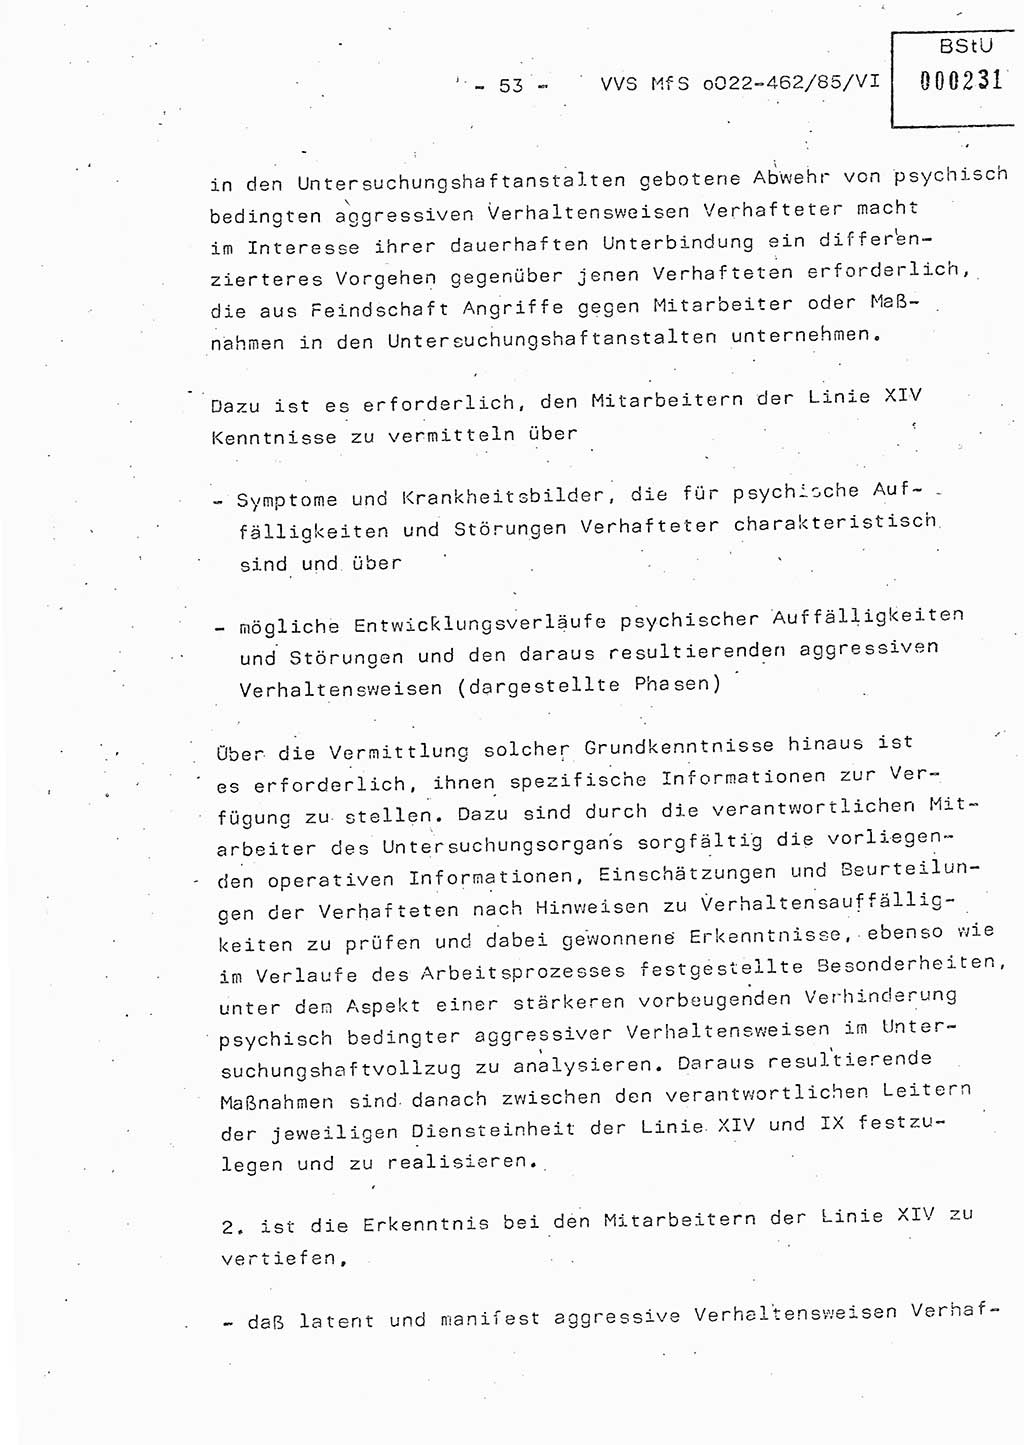 Der Untersuchungshaftvollzug im MfS, Schulungsmaterial Teil â…¥, Ministerium fÃ¼r Staatssicherheit [Deutsche Demokratische Republik (DDR)], Abteilung (Abt.) â…©â…£, Vertrauliche VerschluÃŸsache (VVS) o022-462/85/â…¥, Berlin 1985, Seite 53 (Sch.-Mat. â…¥ MfS DDR Abt. â…©â…£ VVS o022-462/85/â…¥ 1985, S. 53)